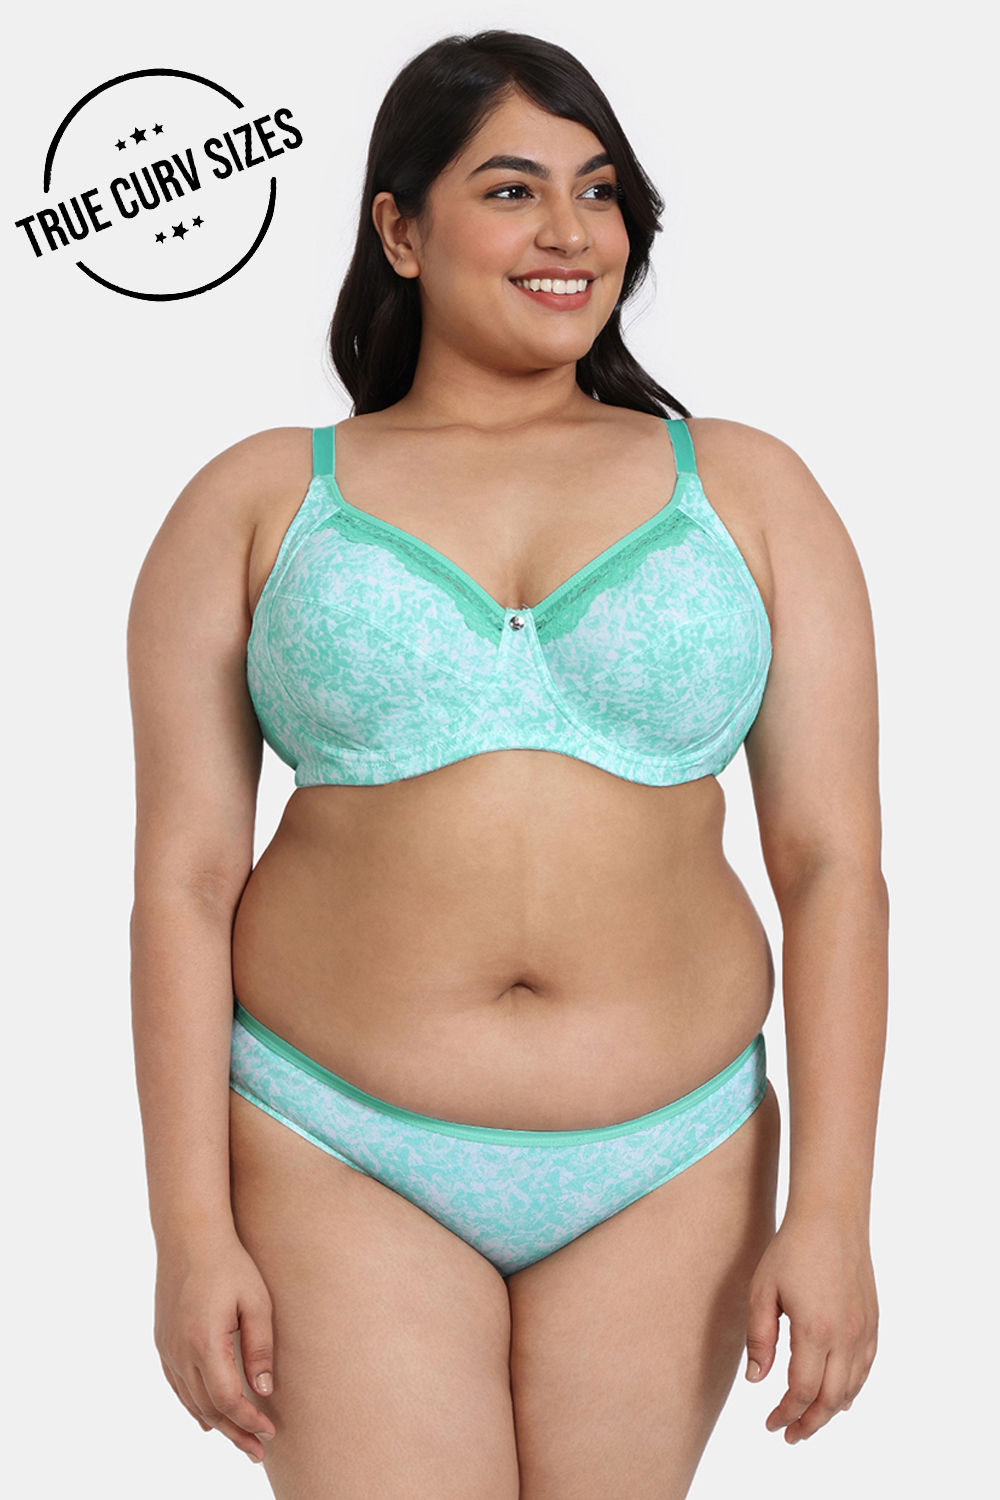 https://cdn.zivame.com/ik-seo/media/catalog/product/1/_/1_68_1/zivame-mio-amore-double-layered-padded-regular-wired-full-coverage-super-support-bra-with-bikini-panty-green-print.jpg